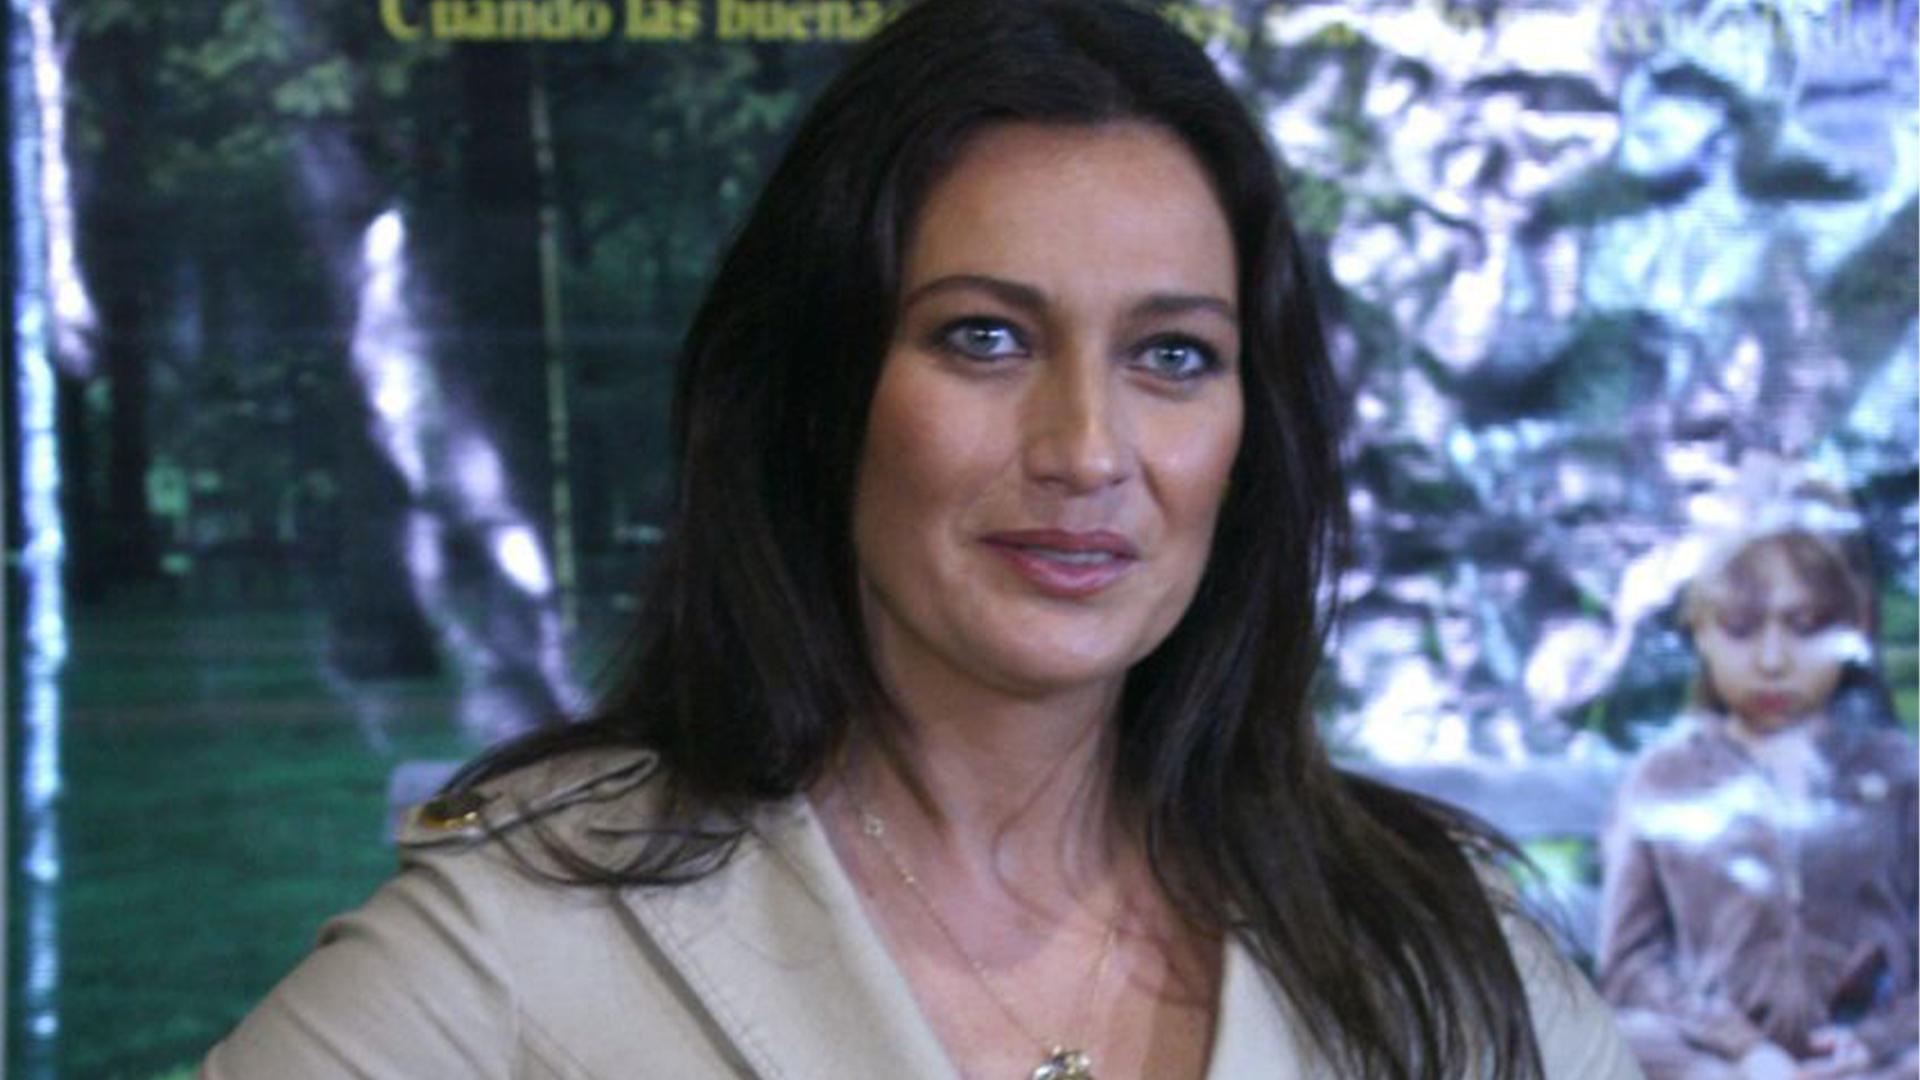 Diana Golden defendió a hermano de Mónica Dossetti tras video de agresión: “Entiendo que estés desesperado”